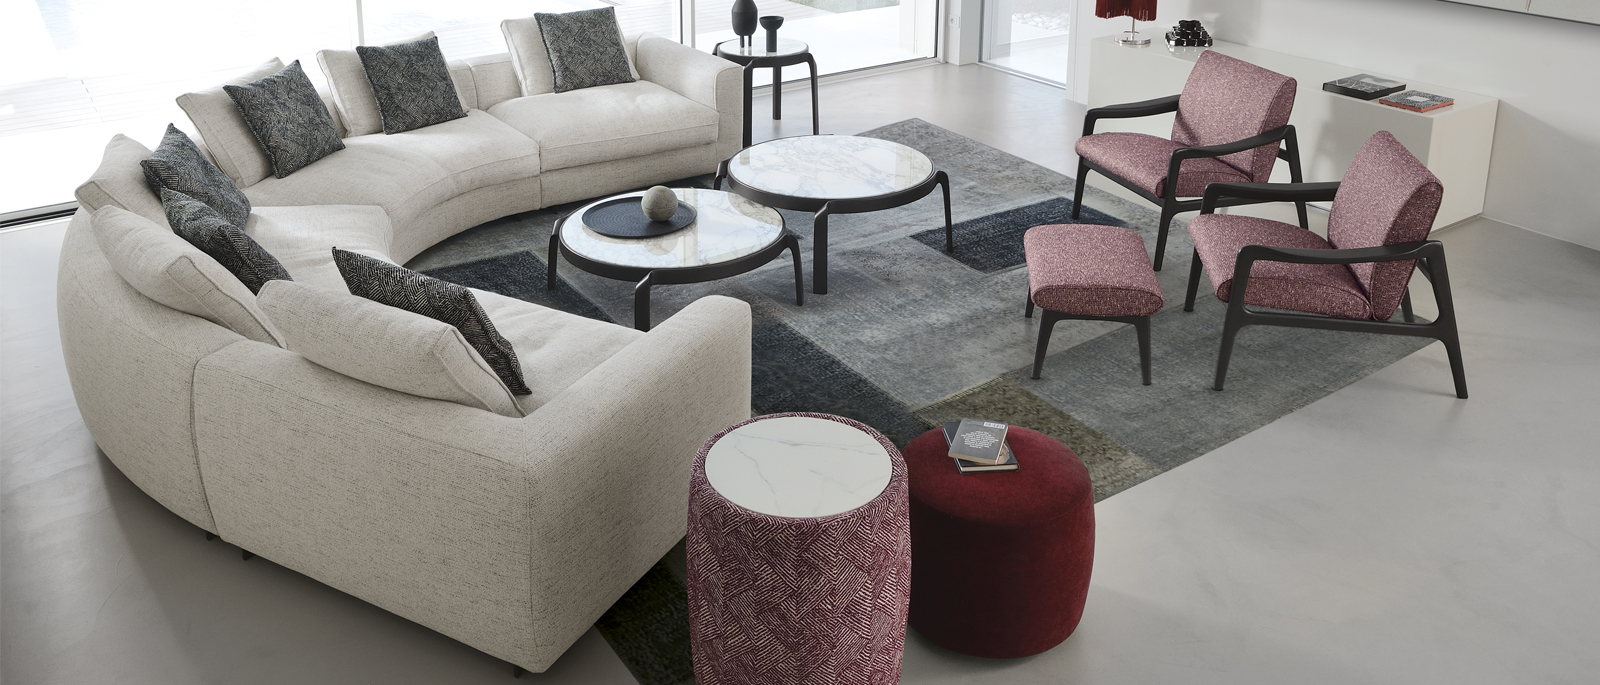 modern living room with luxury sofa set